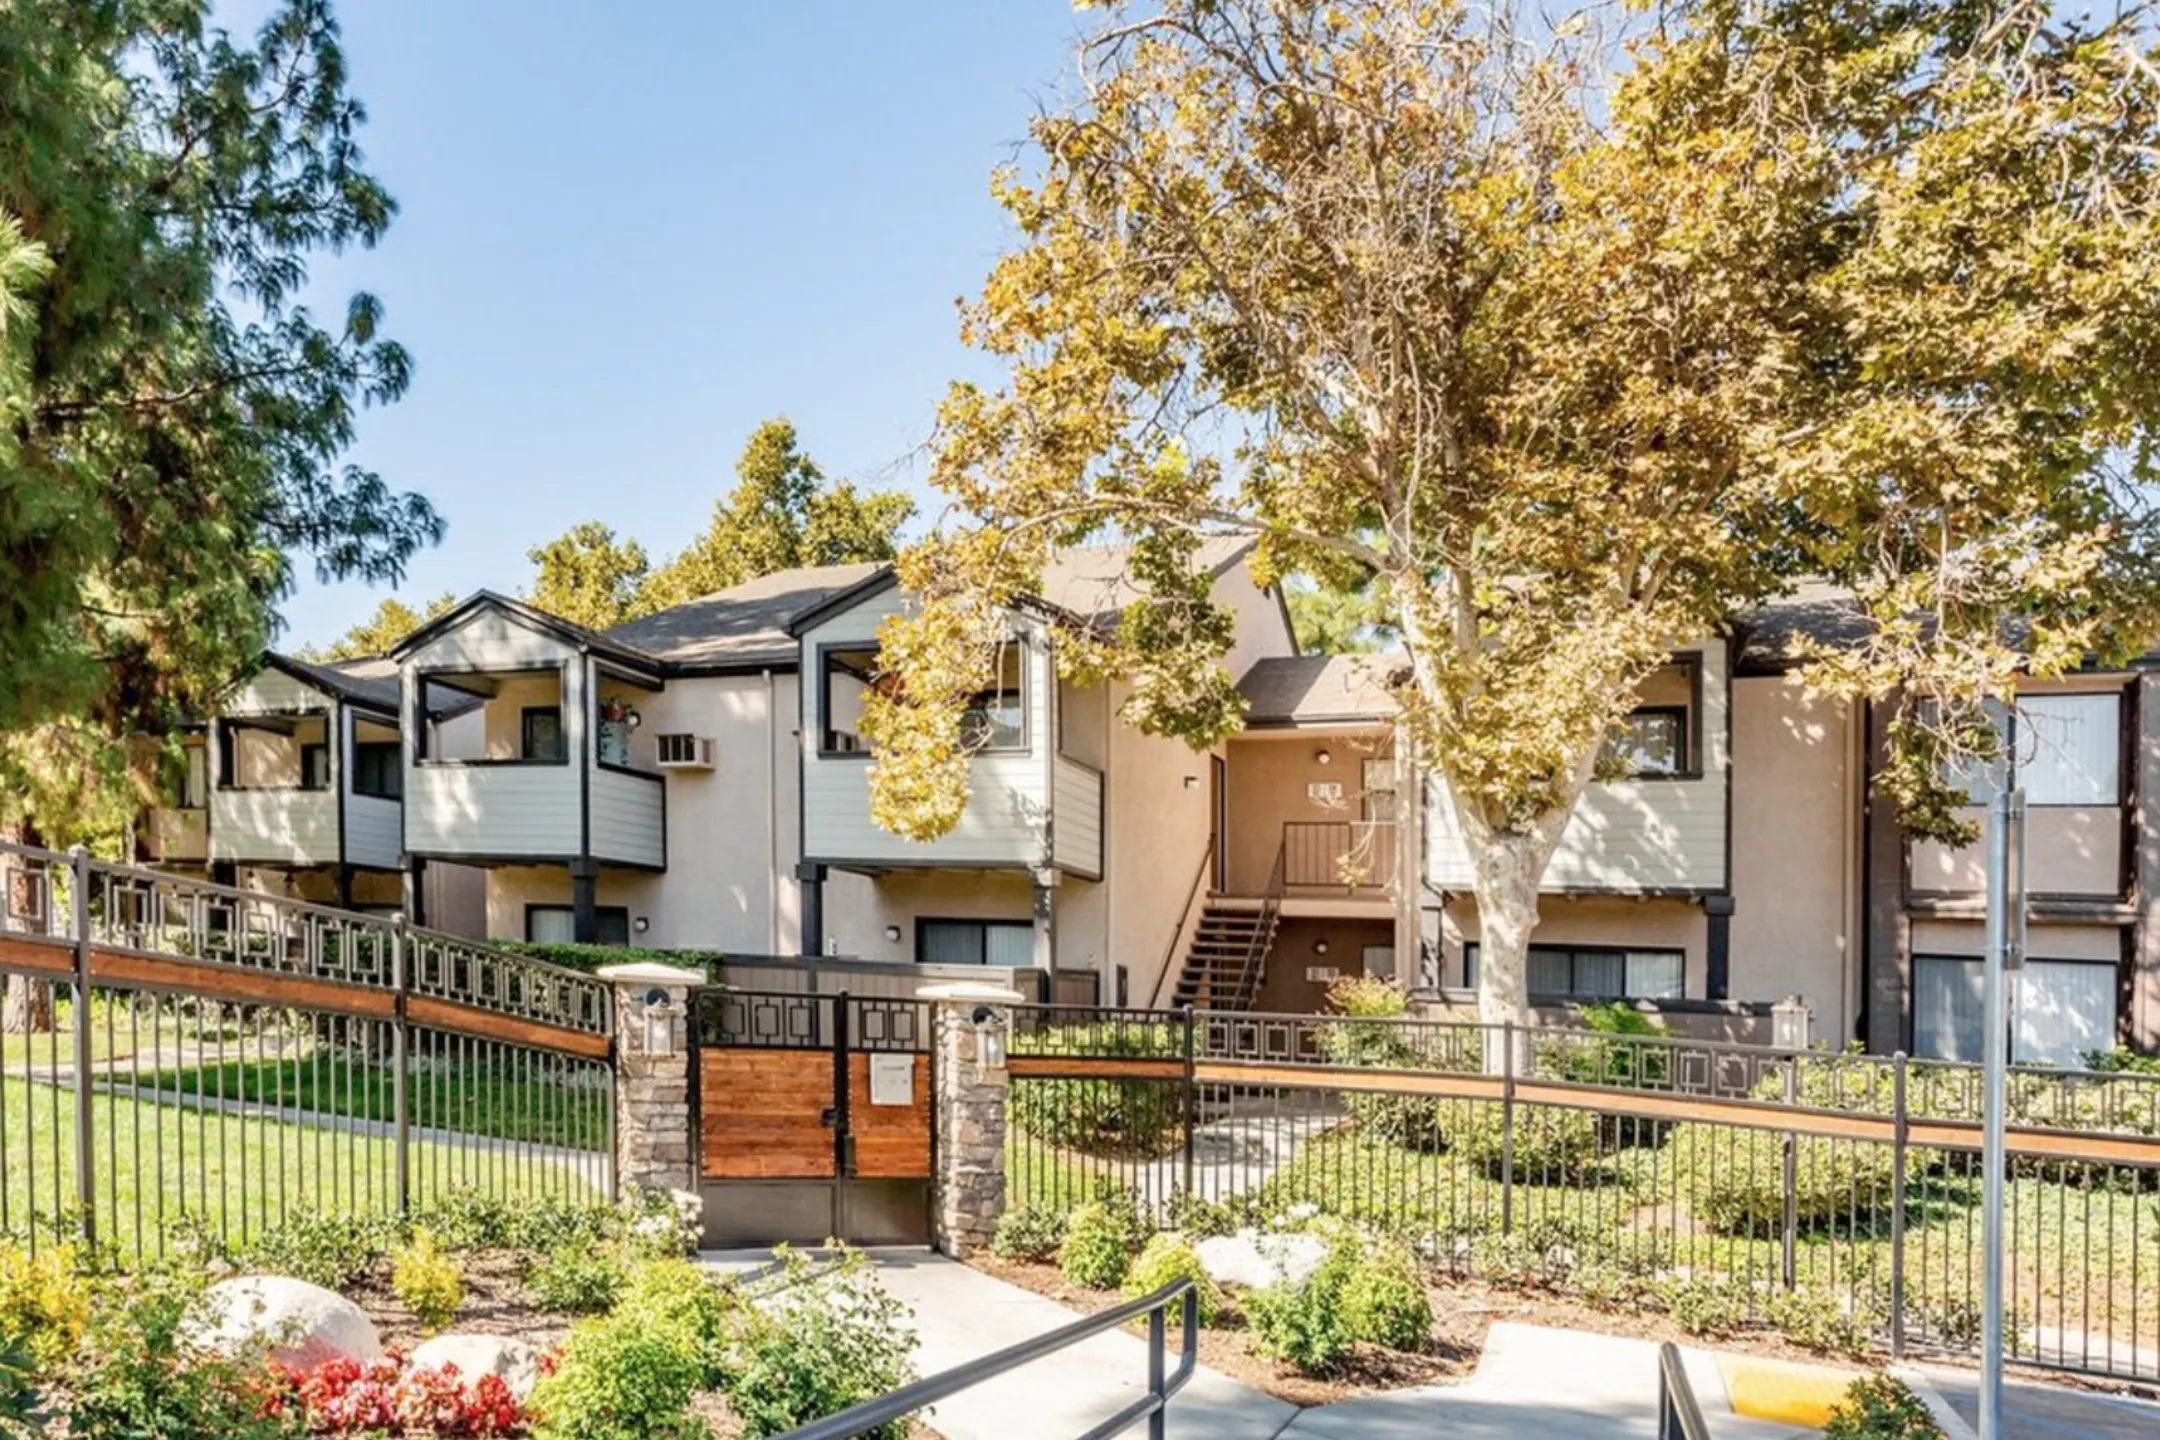 Building - Stonewood Apartment Homes - Riverside, CA